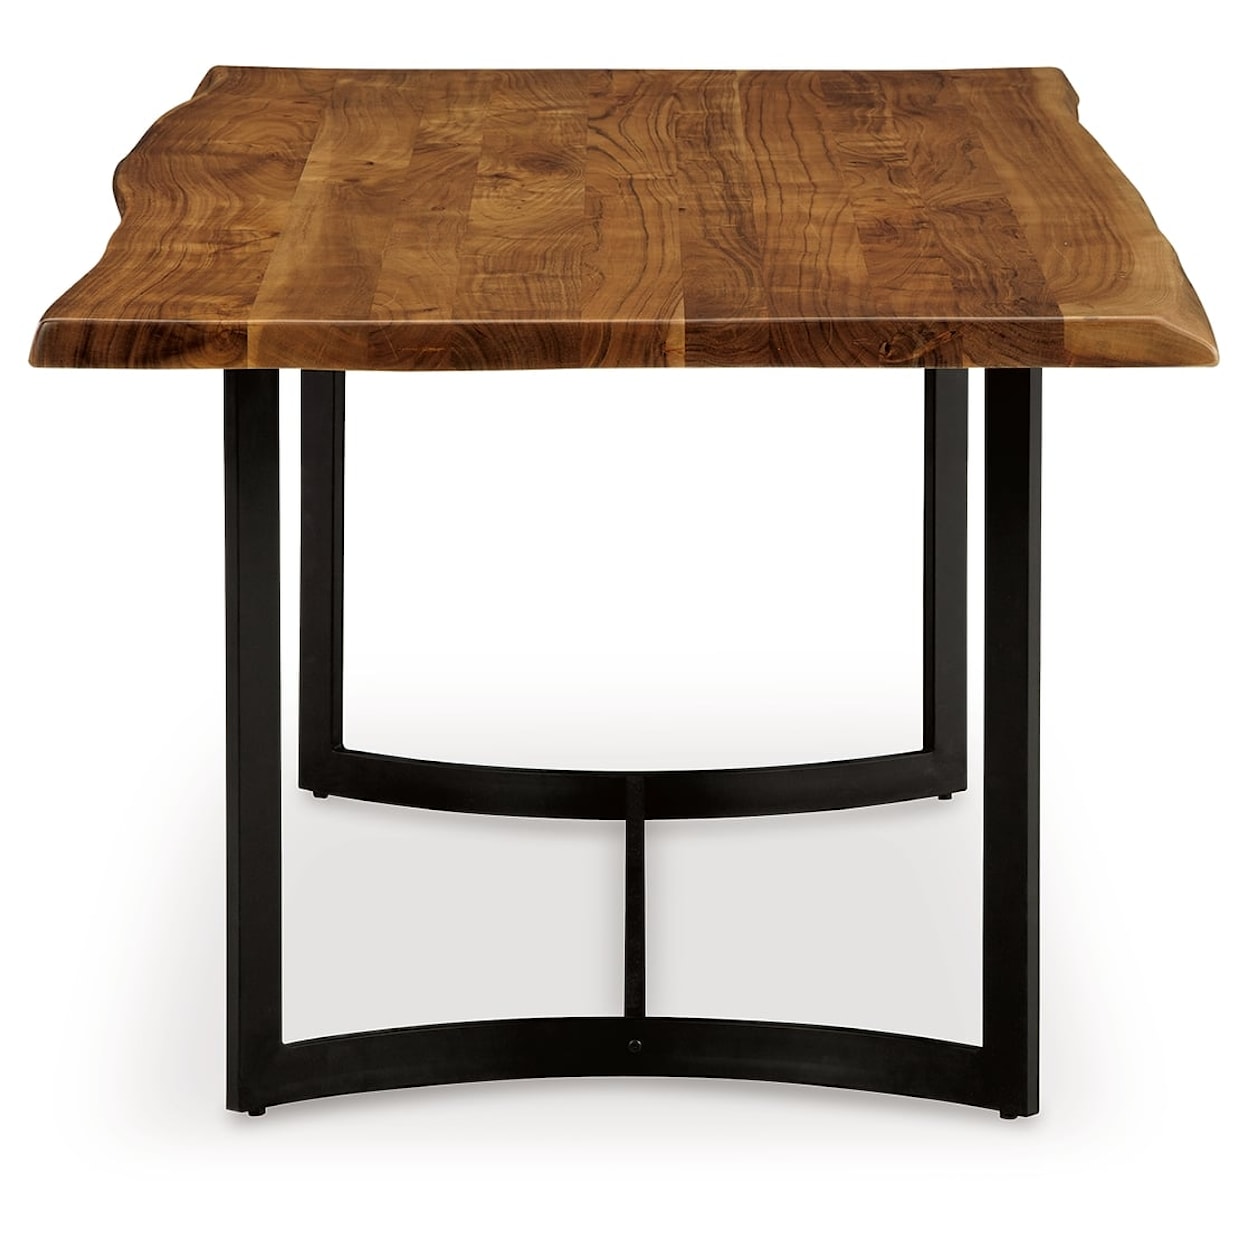 StyleLine Fortmaine Rectangular Dining Room Table